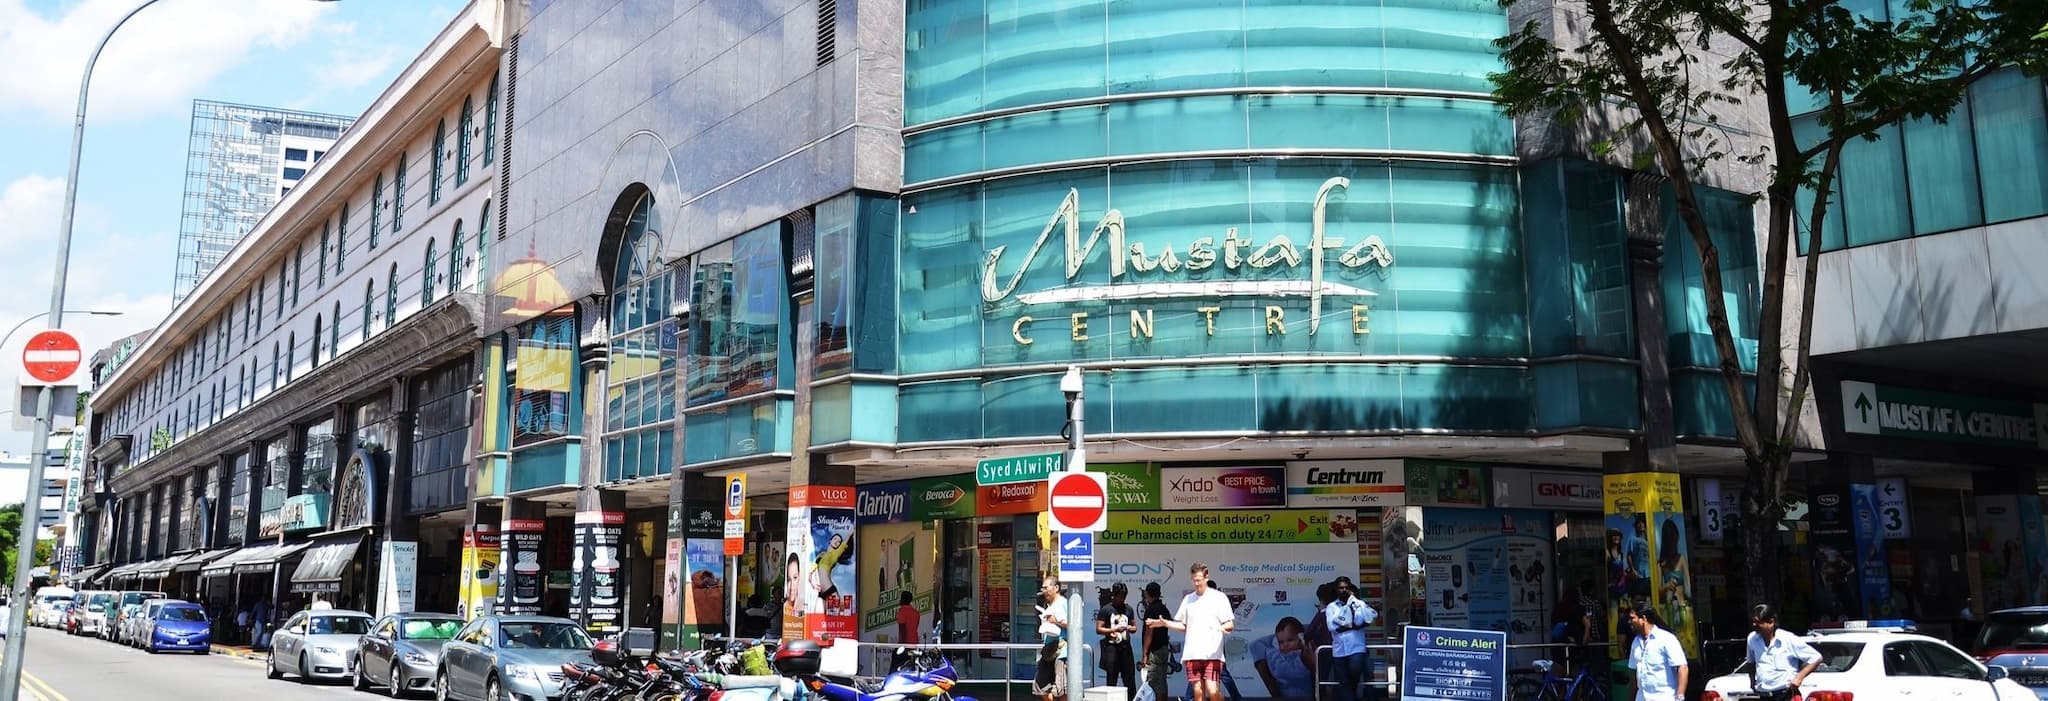 Mustafa Centre